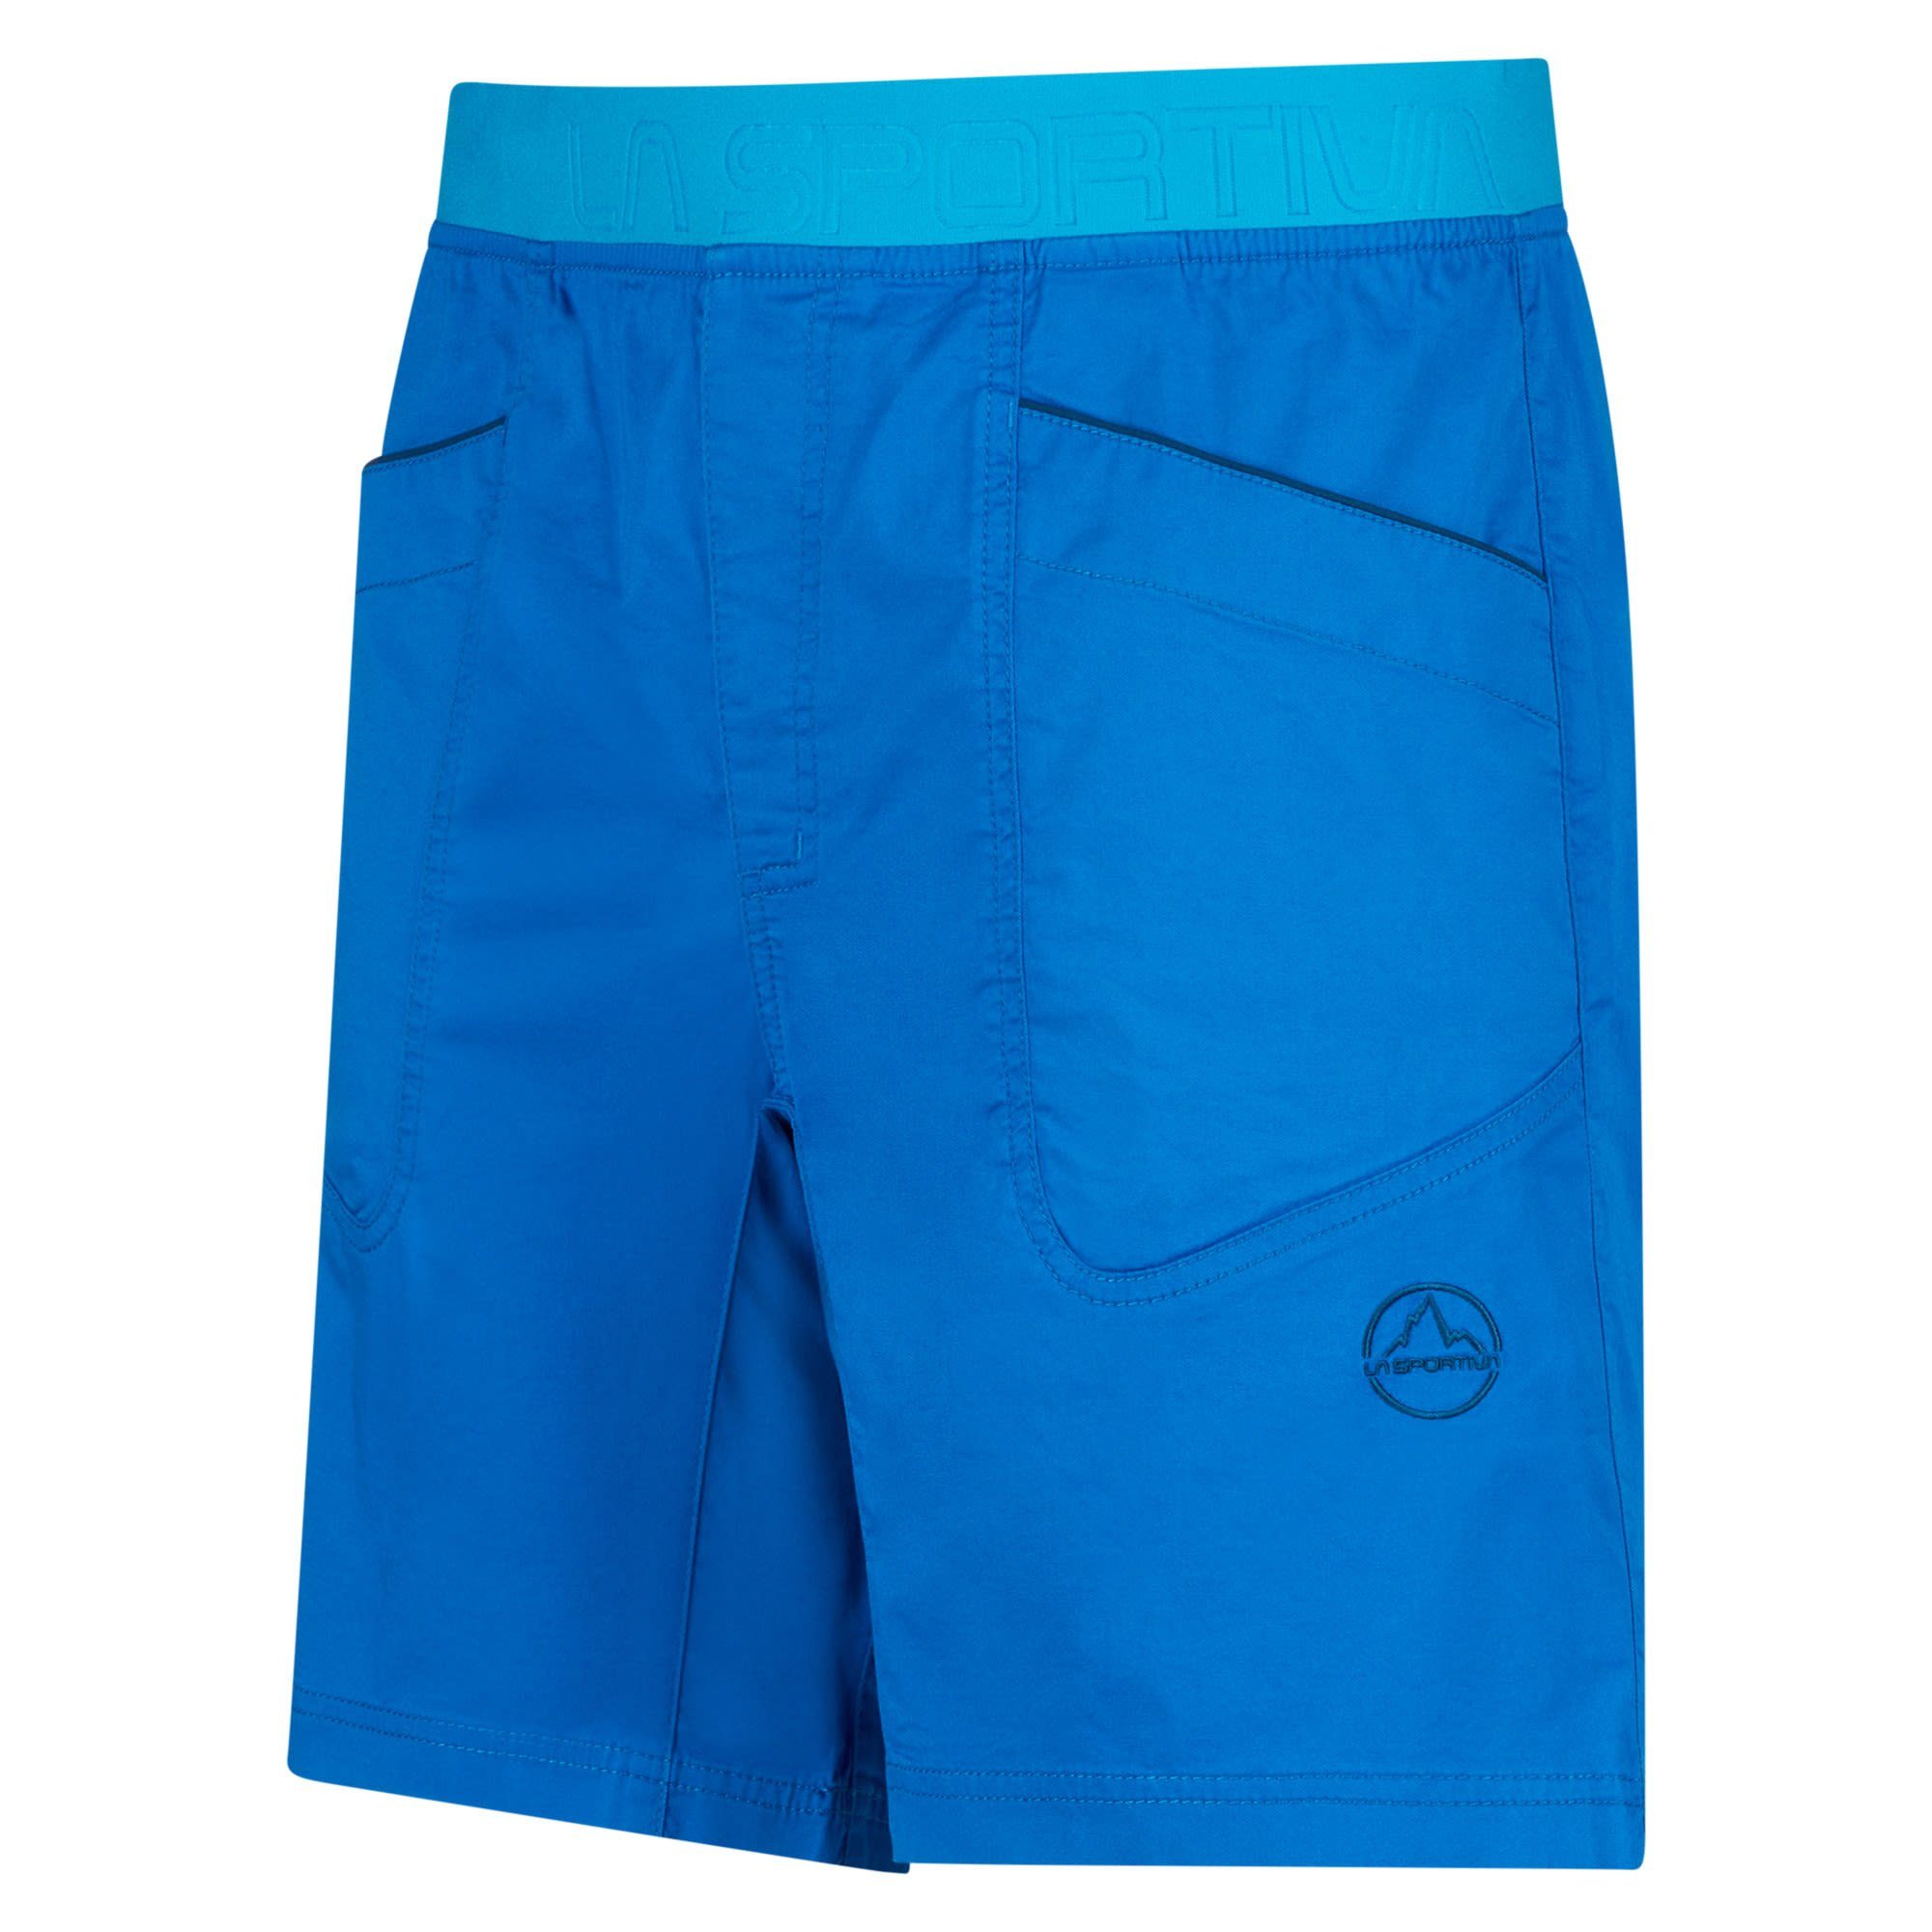 M - Maui Herren La Sportiva Esquirol Blue Electric Shorts Short La Sportiva Strandshorts